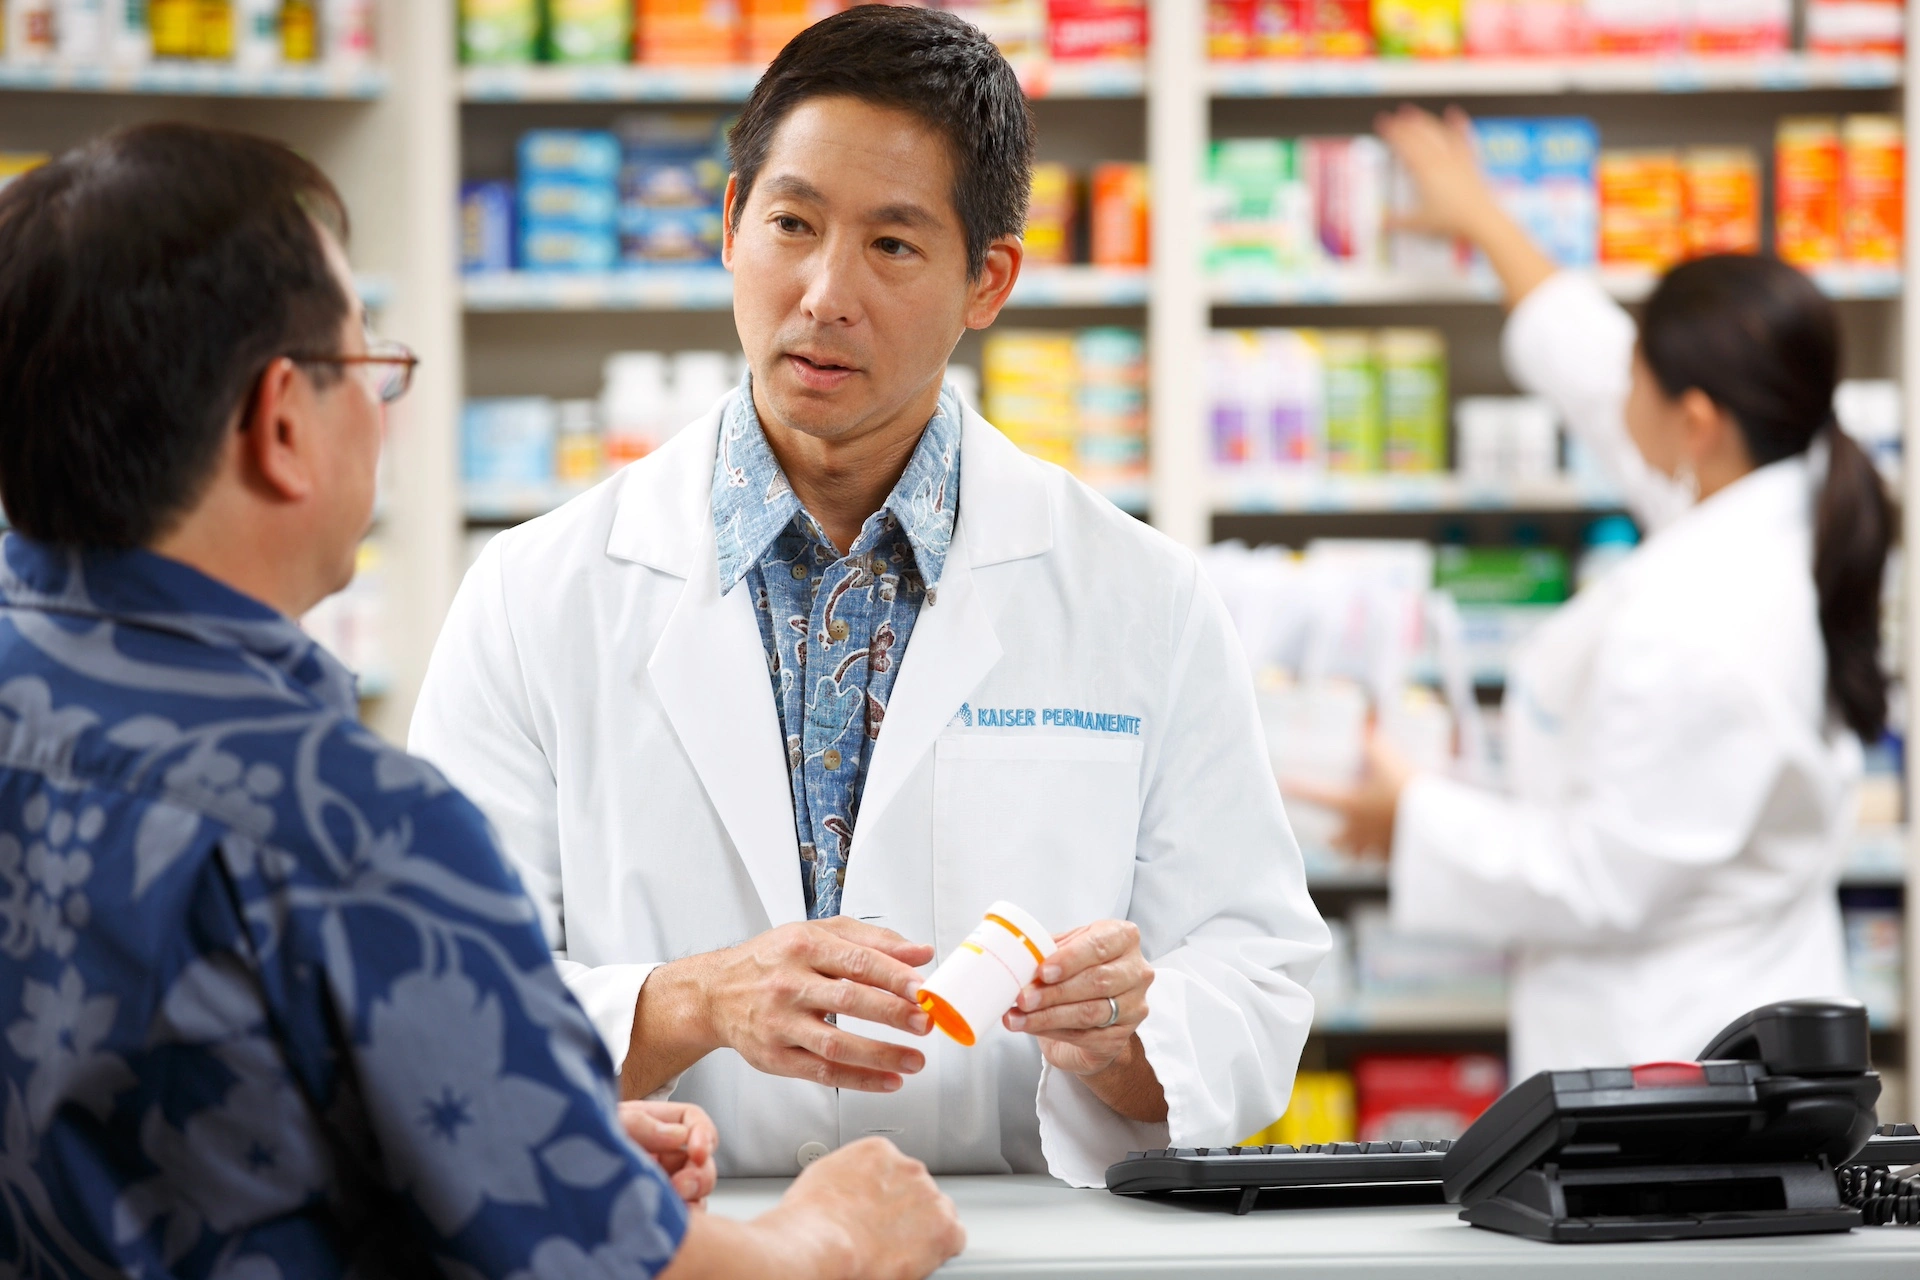 Doctor giving prescription to member